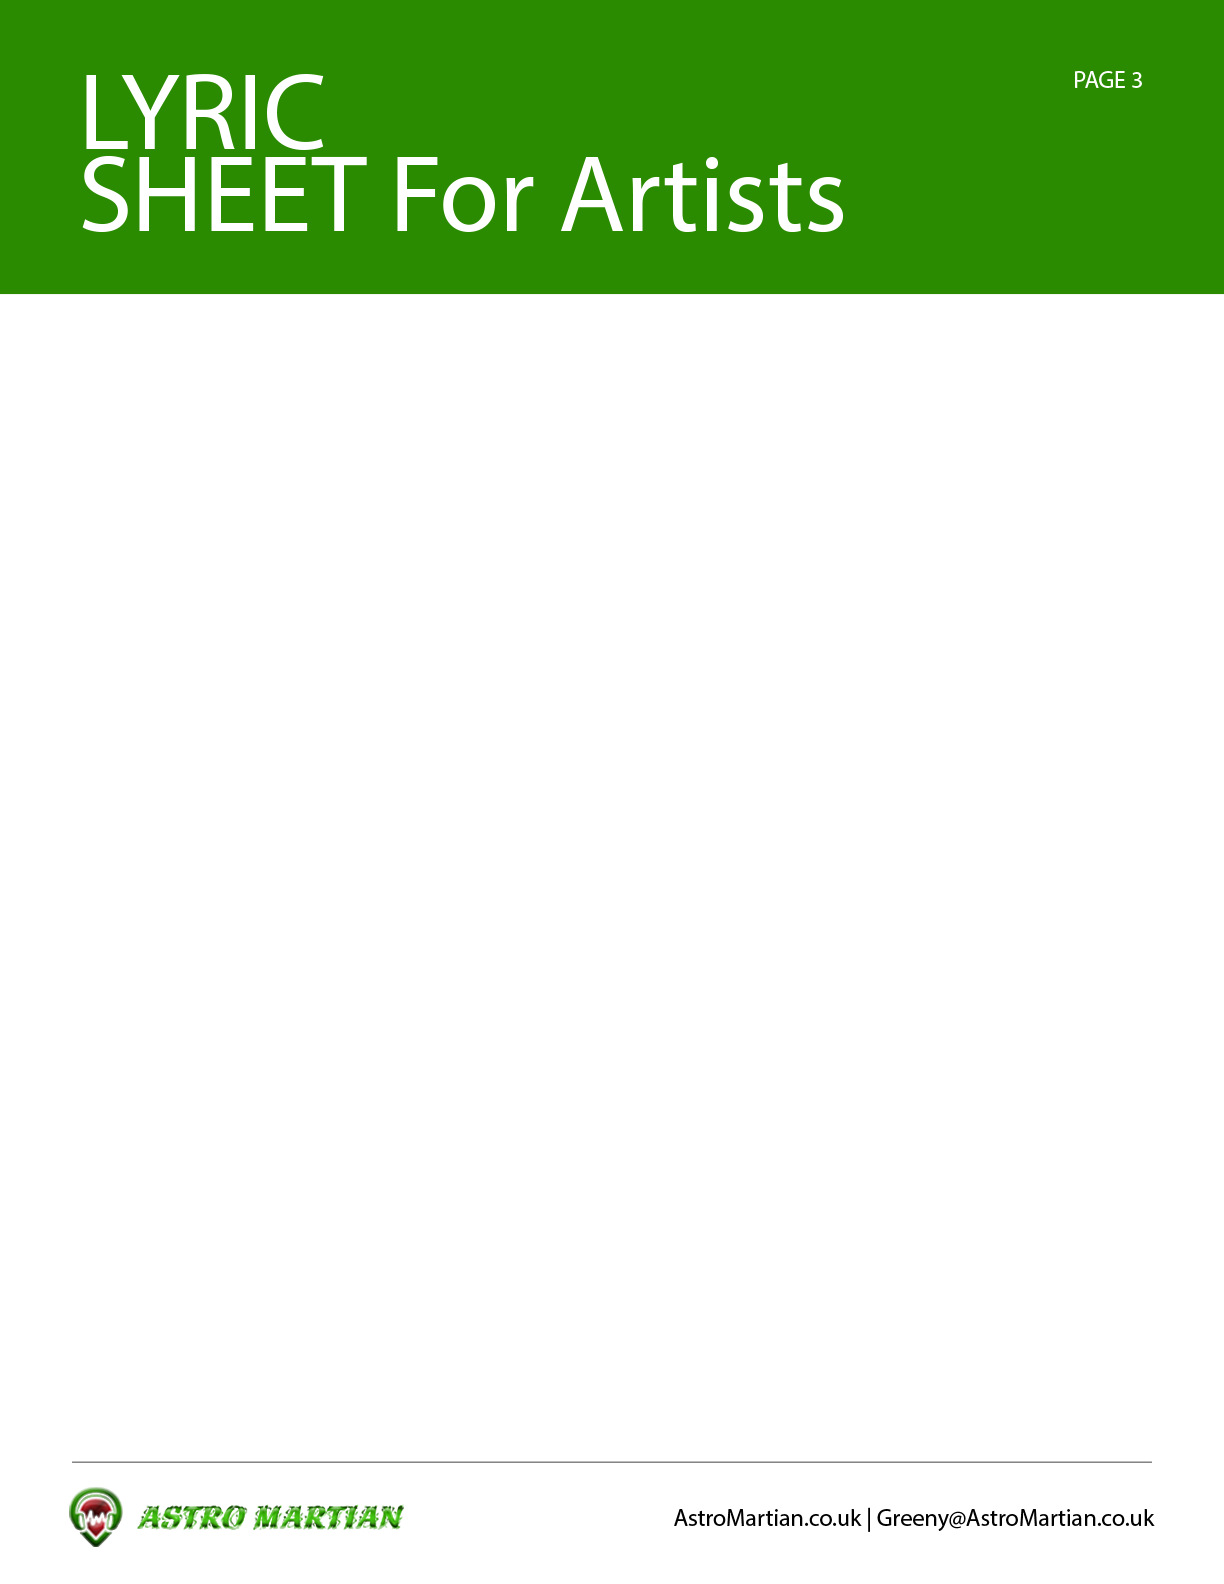 Lyrics sheet for Artists